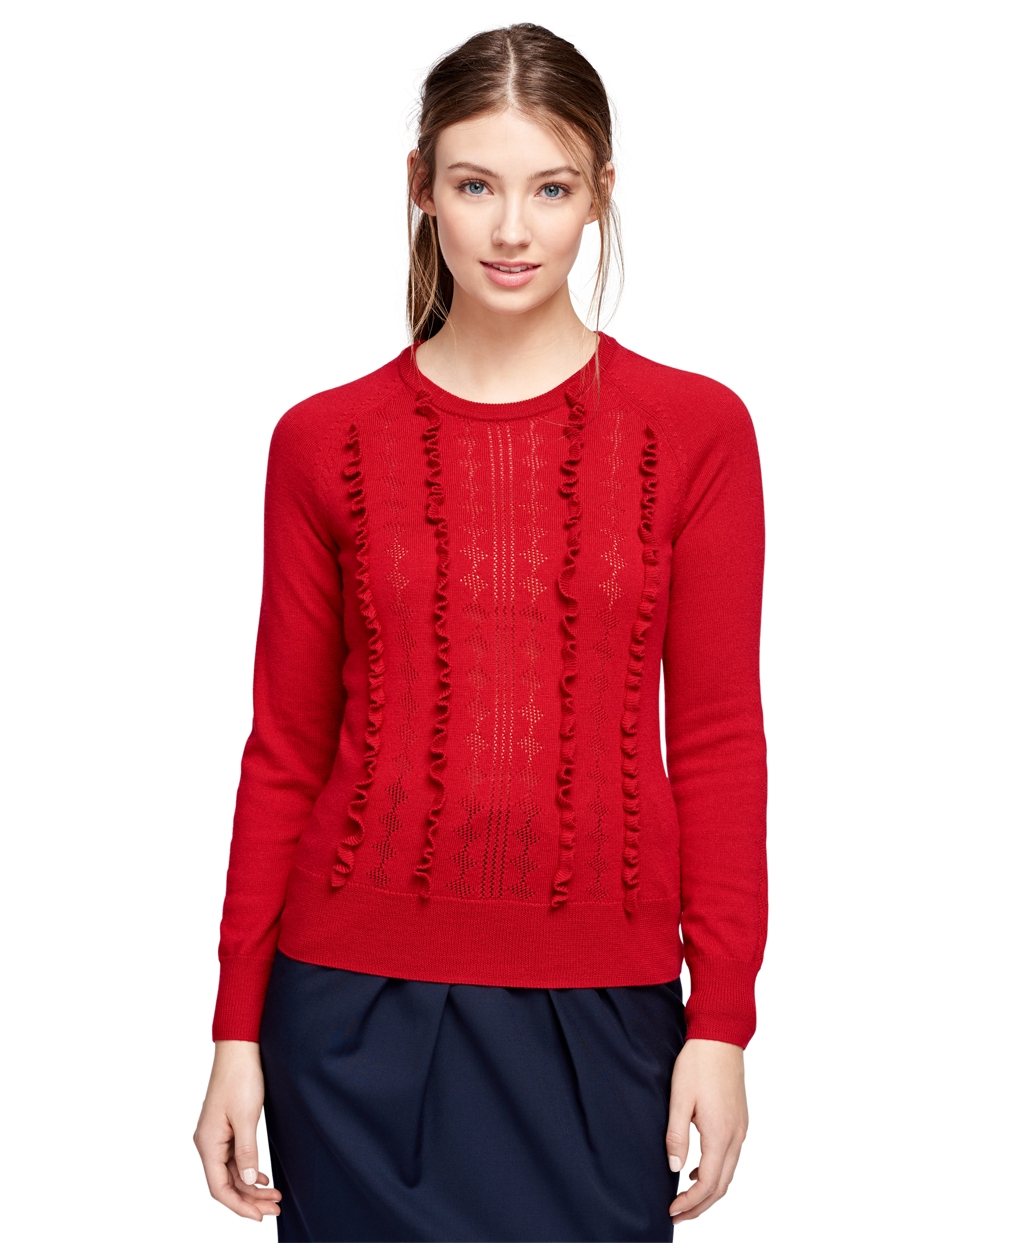 Lyst - Brooks Brothers Merino Wool Ruffle Sweater in Red